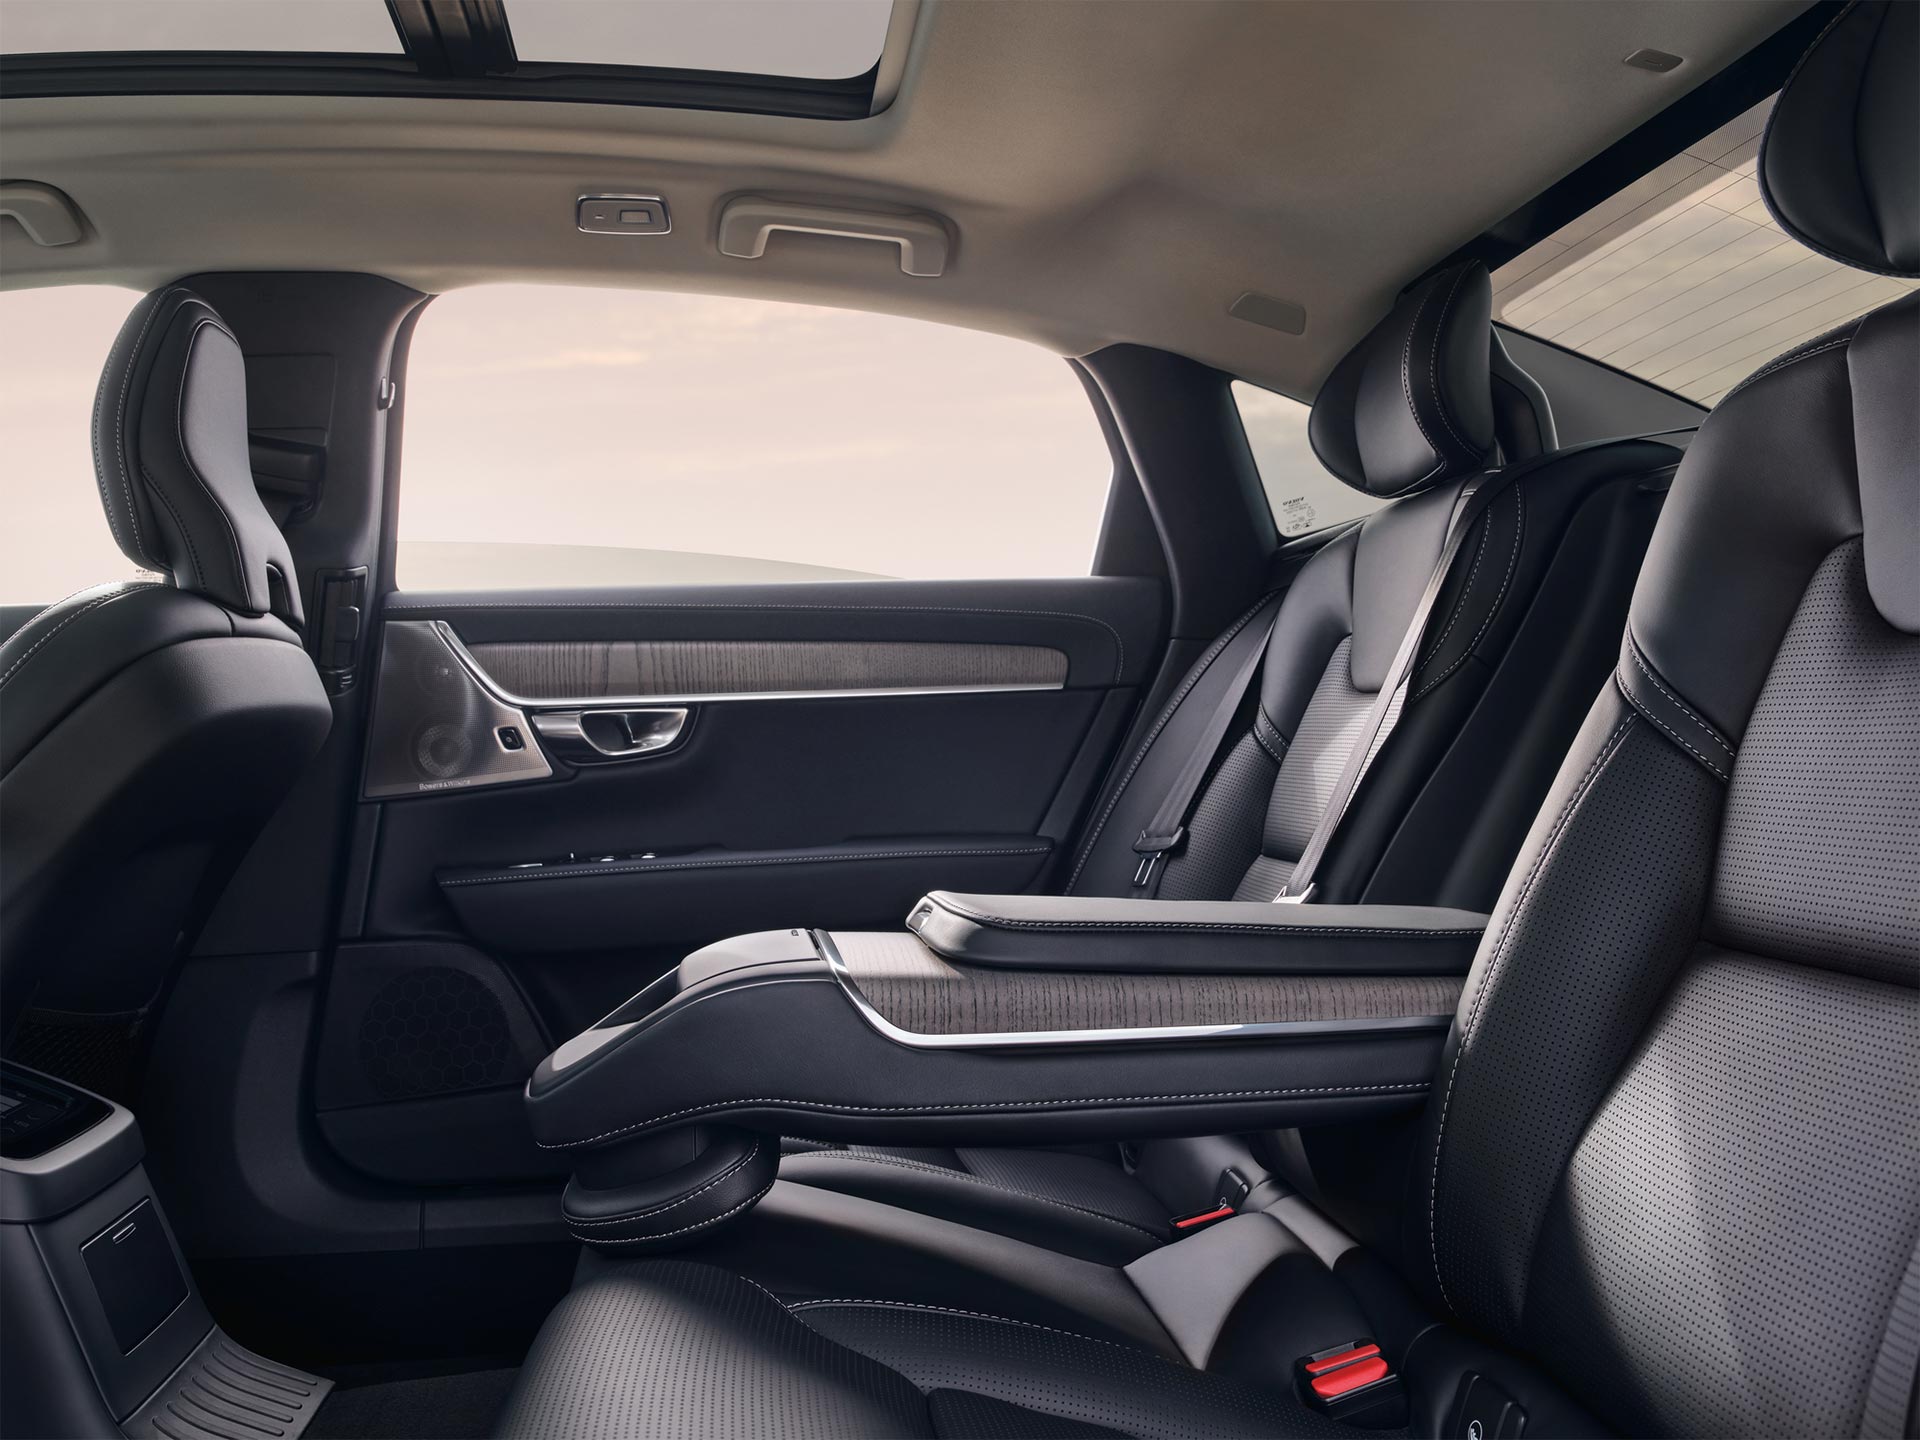 S90 轿车内部后排宽敞的腿部空间和独家中央扶手装置。